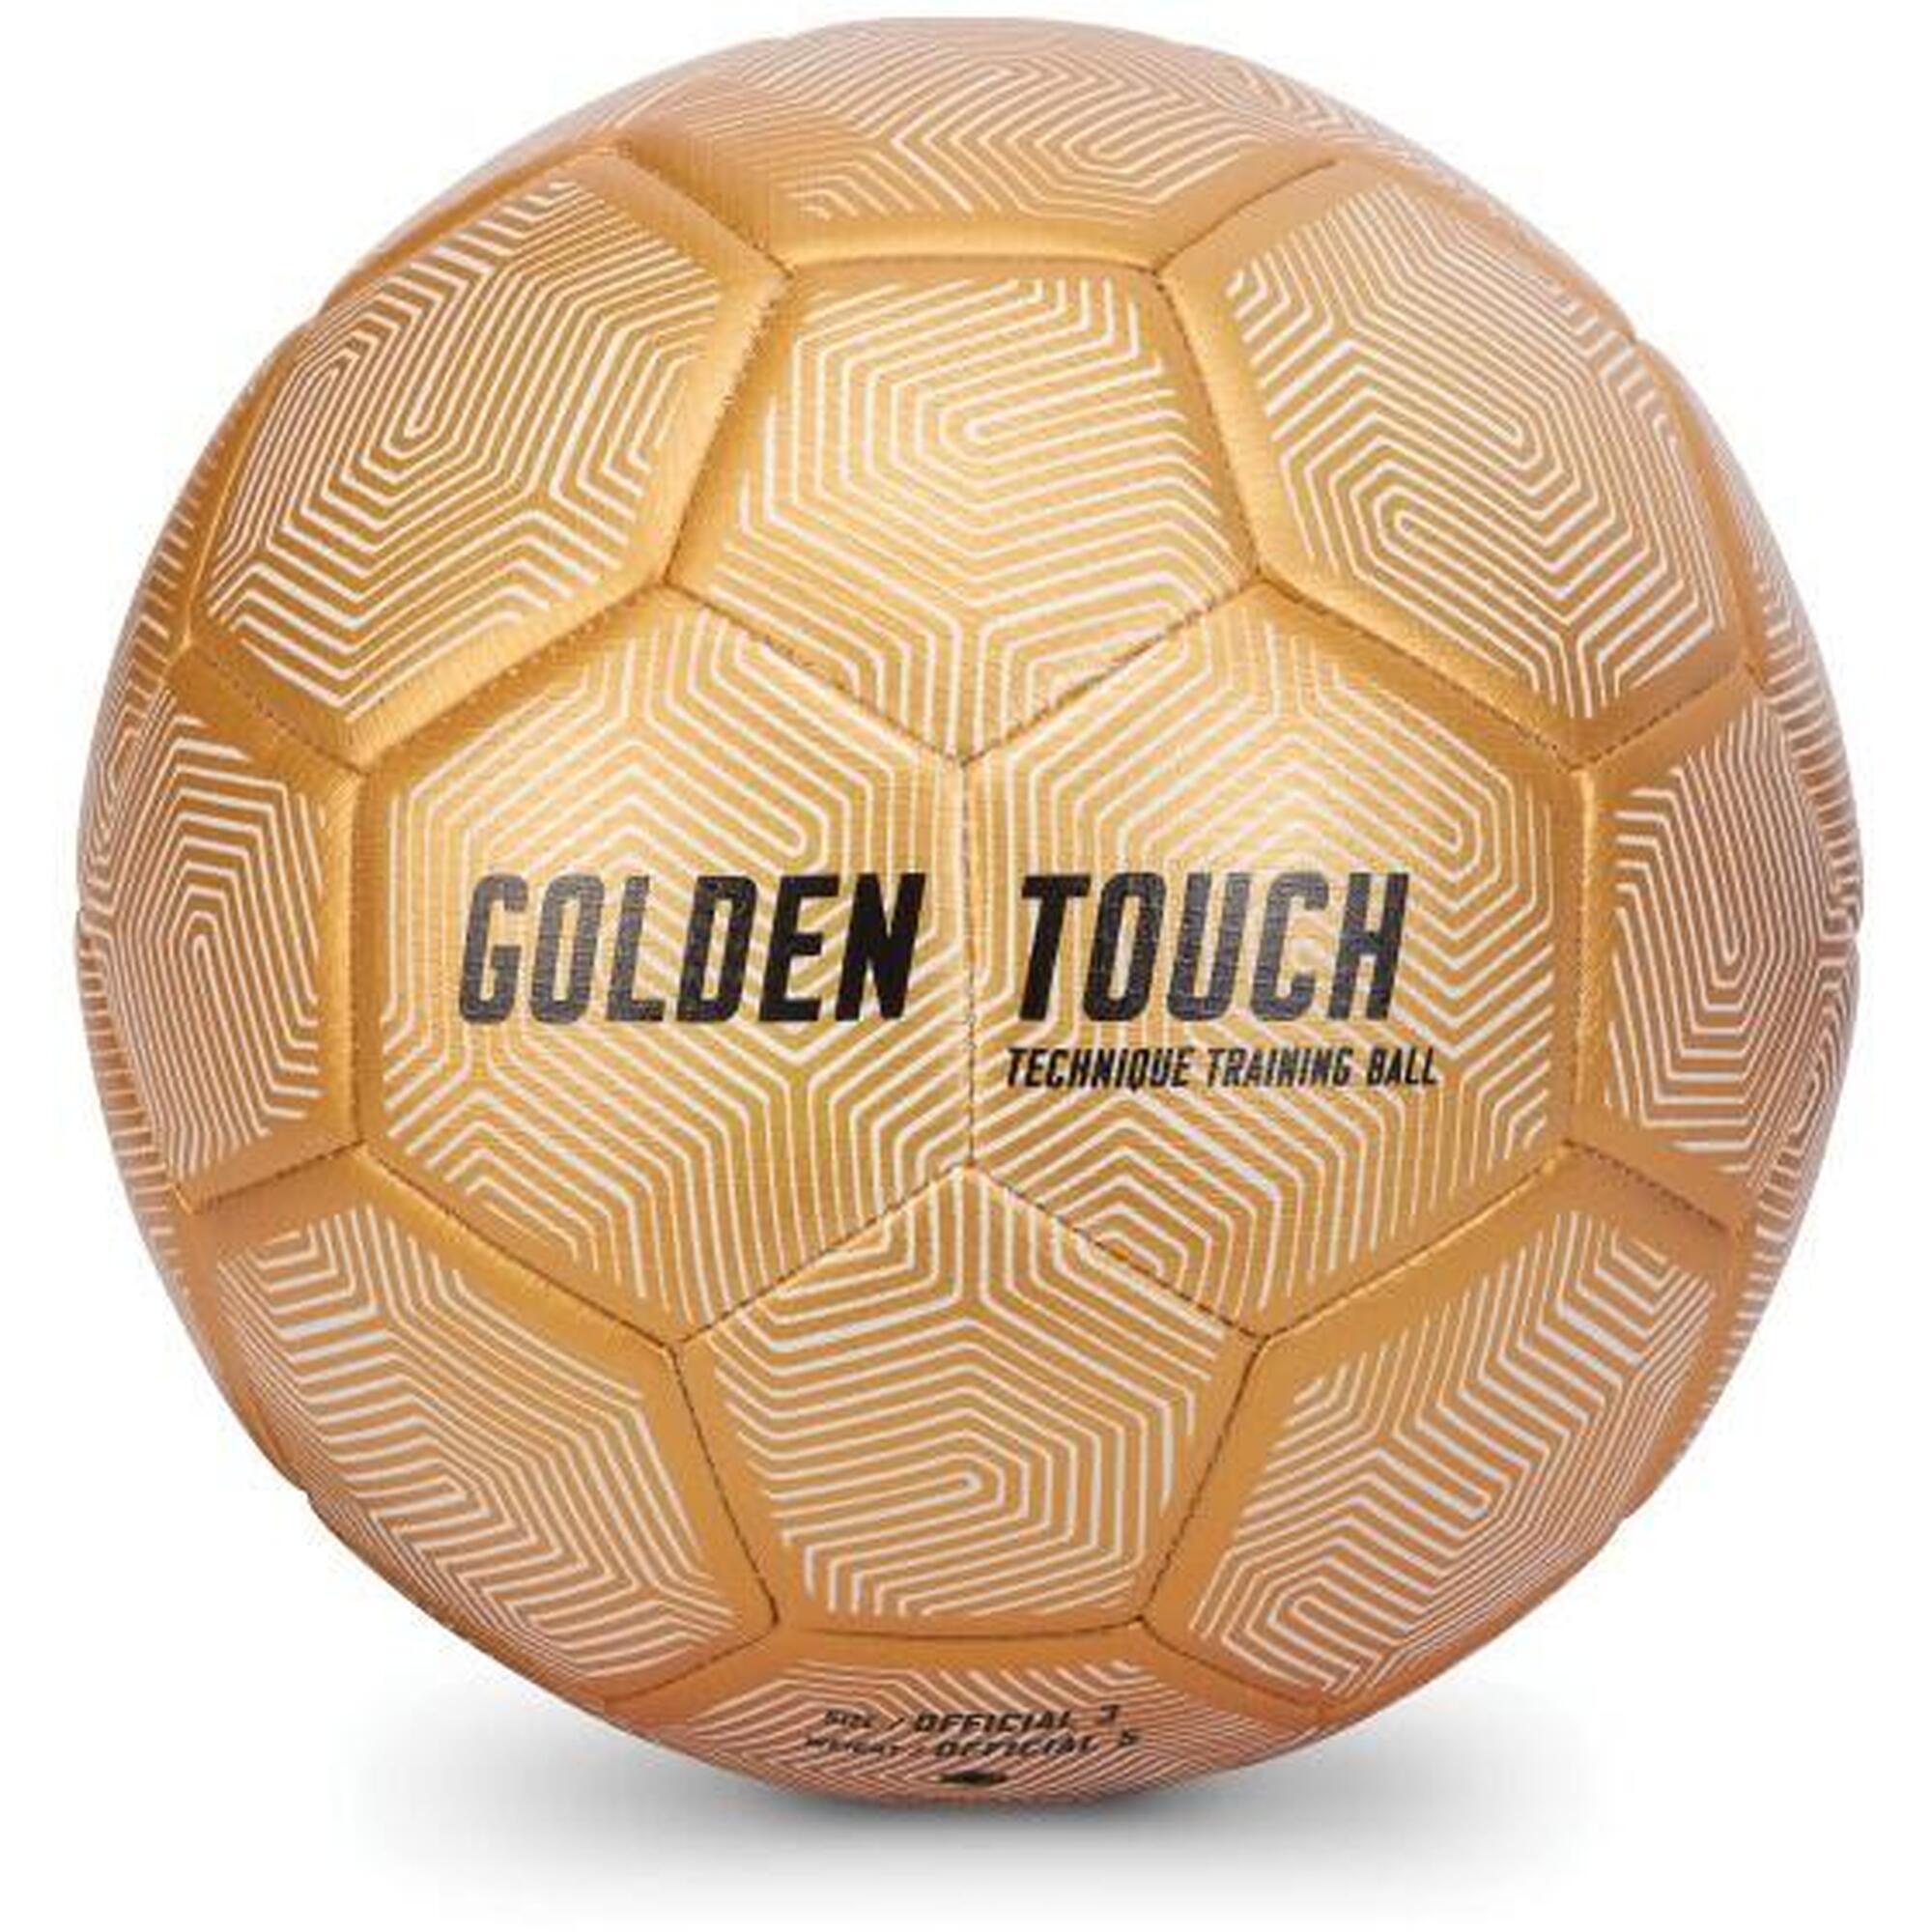 Ballon de Football, taille officielle, doré - SKLZ Golden Touch